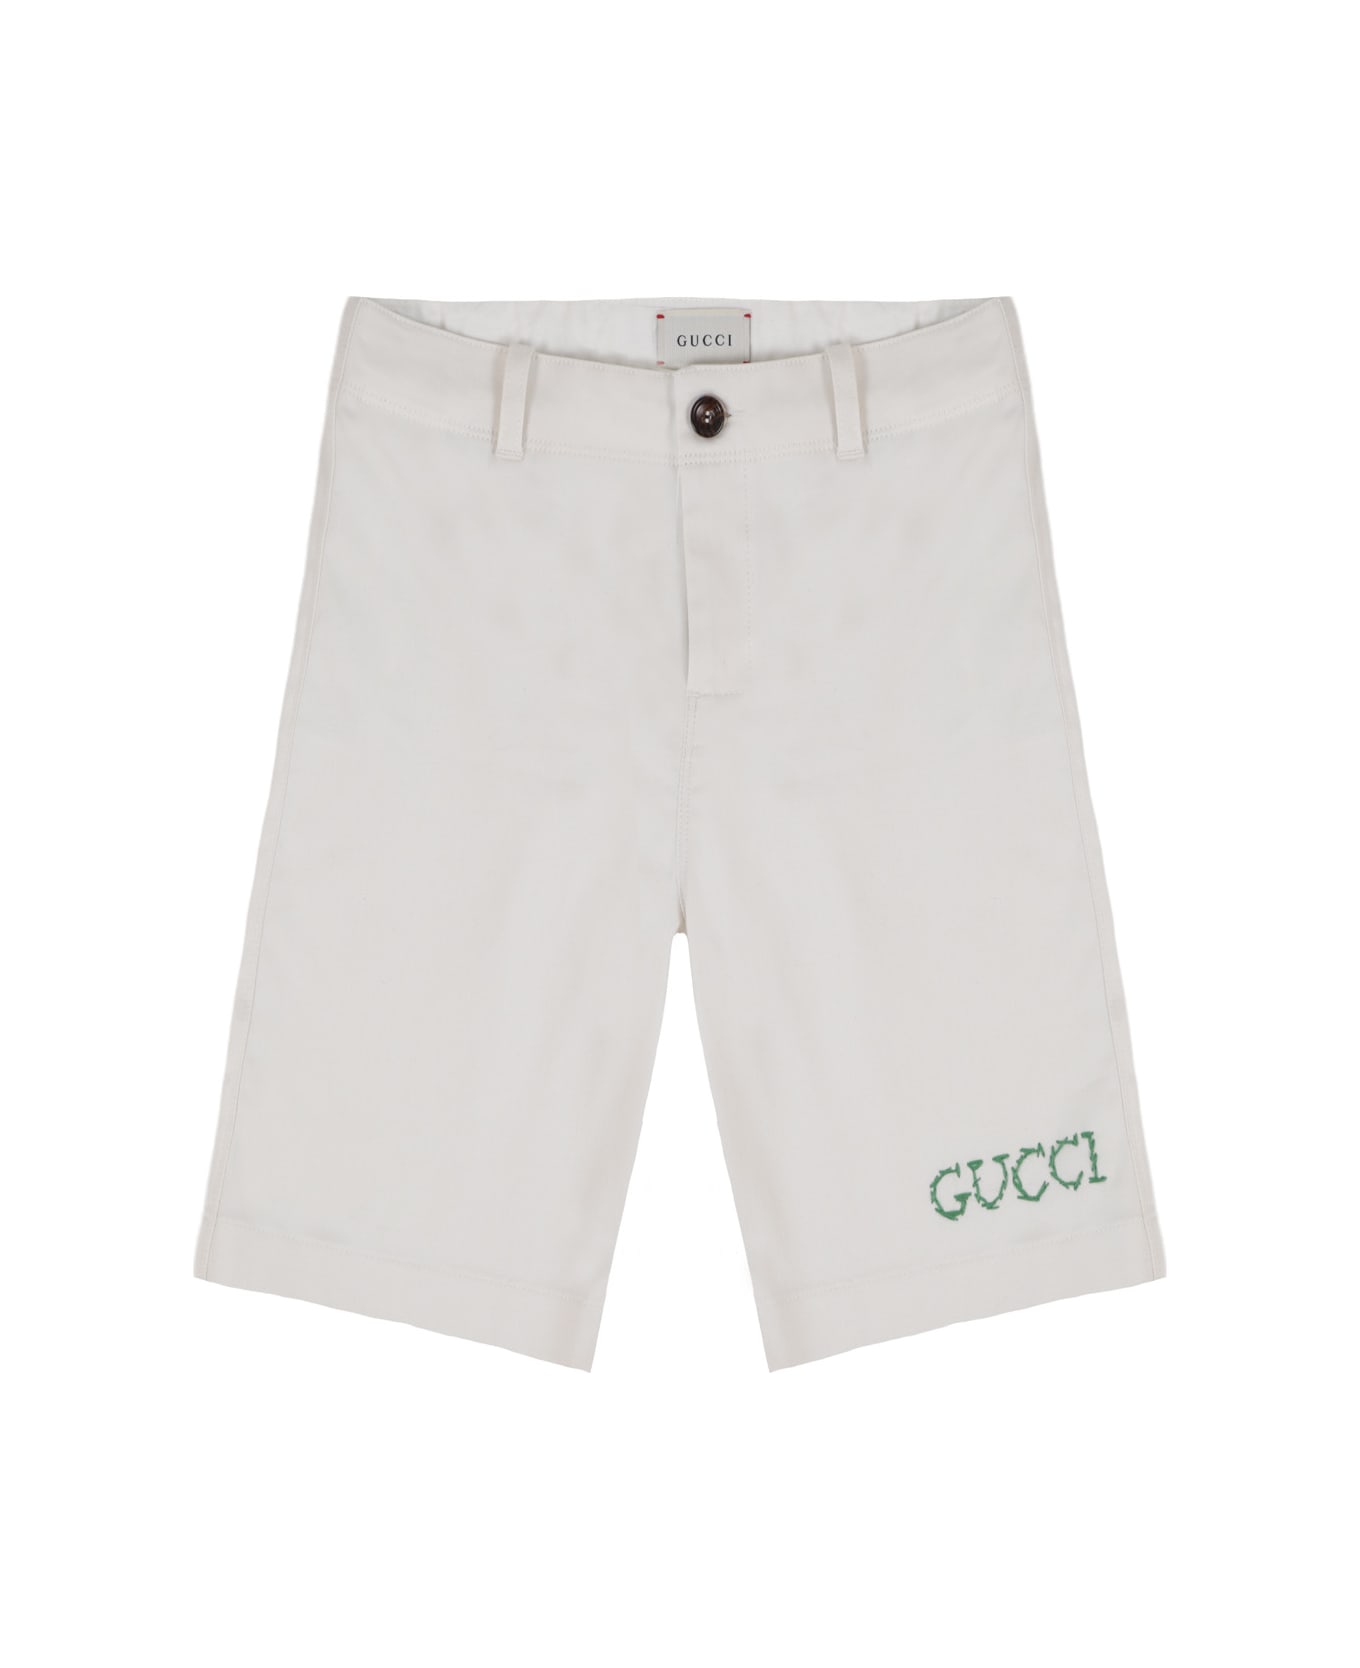 Gucci Cotton Shorts - White